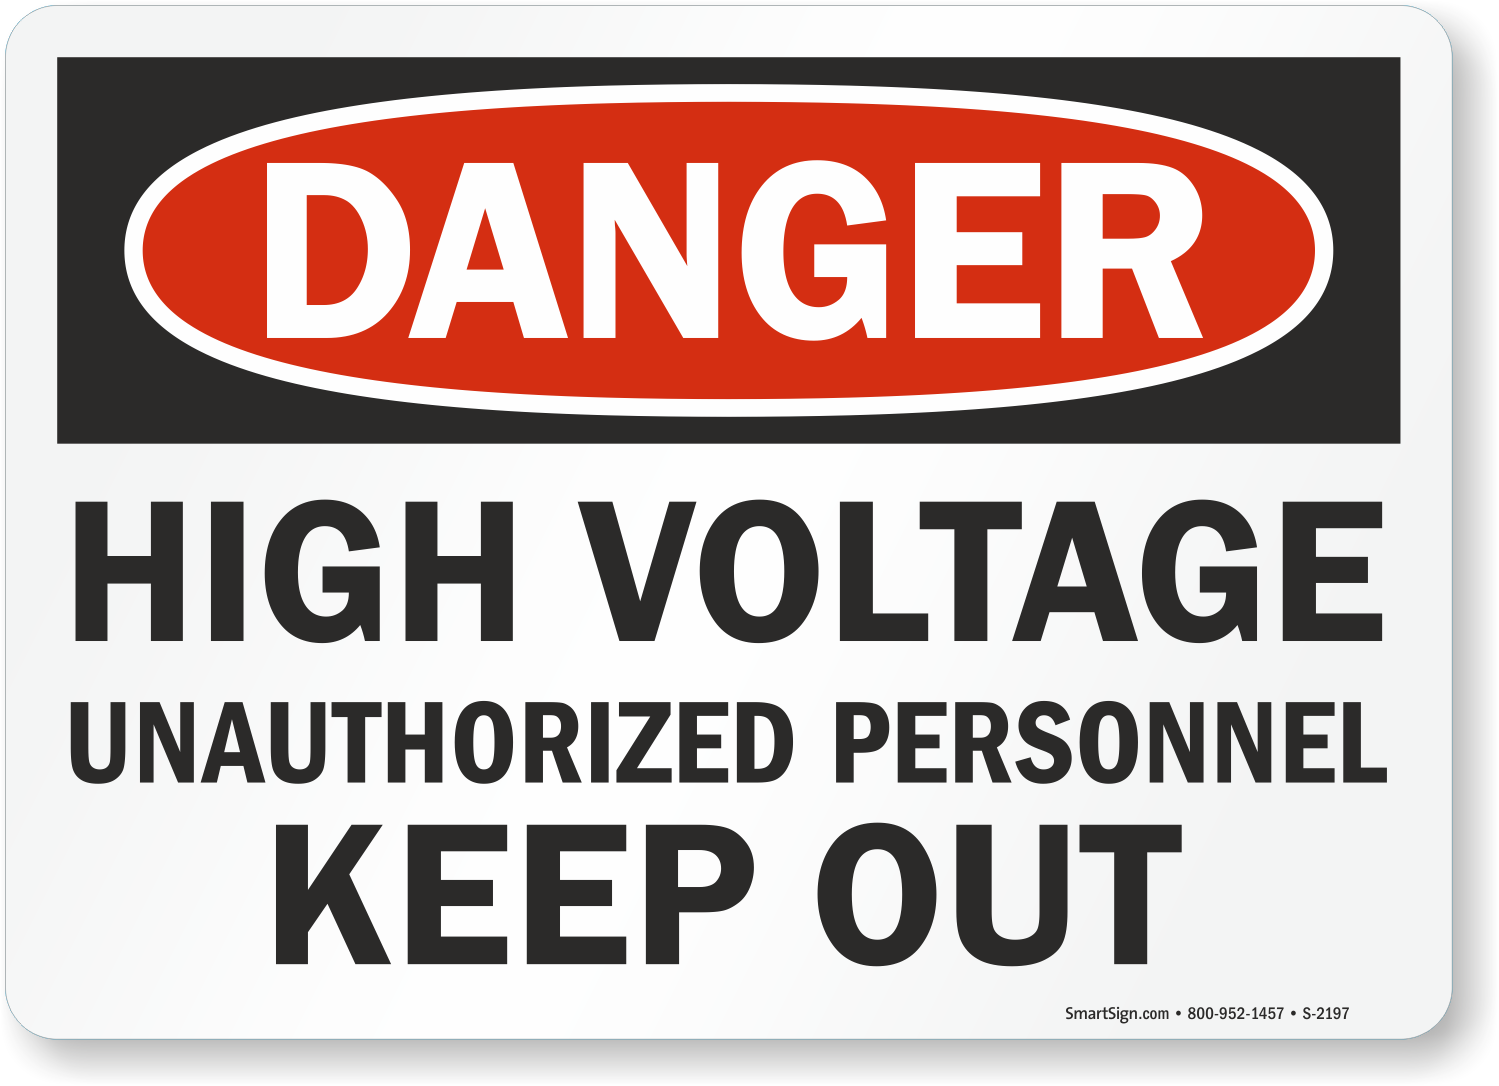 Unauthorized перевод. Danger High Voltage keep out. Danger High Voltage unauthorised personnel keep out плакат. Табличка keep out. Danger High Voltage красные буквы.